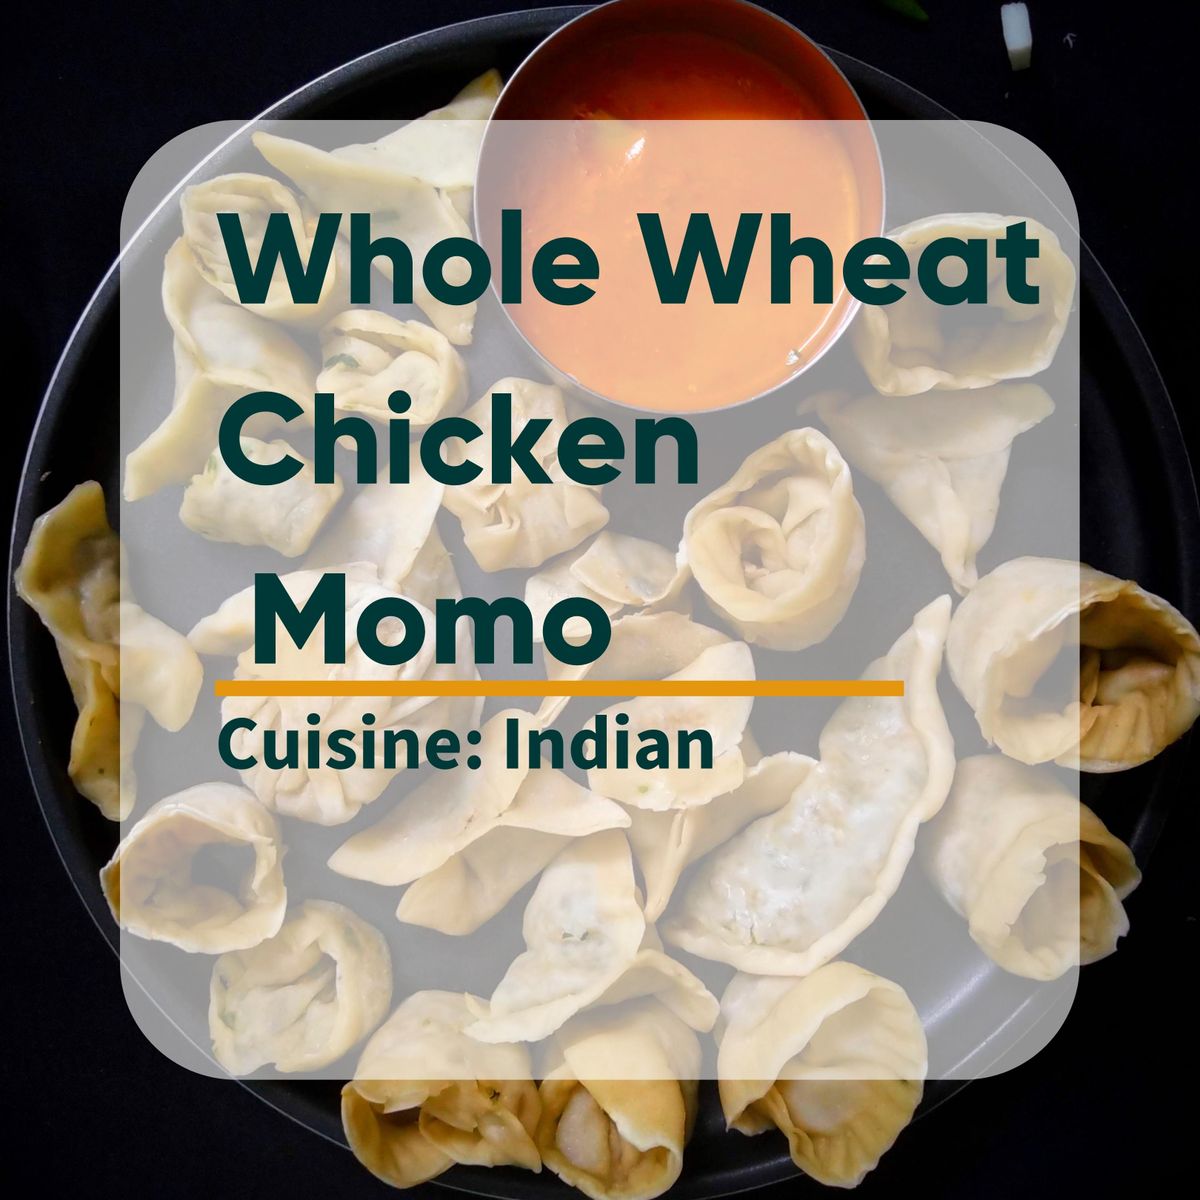 Whole Wheat Chicken Momo Image